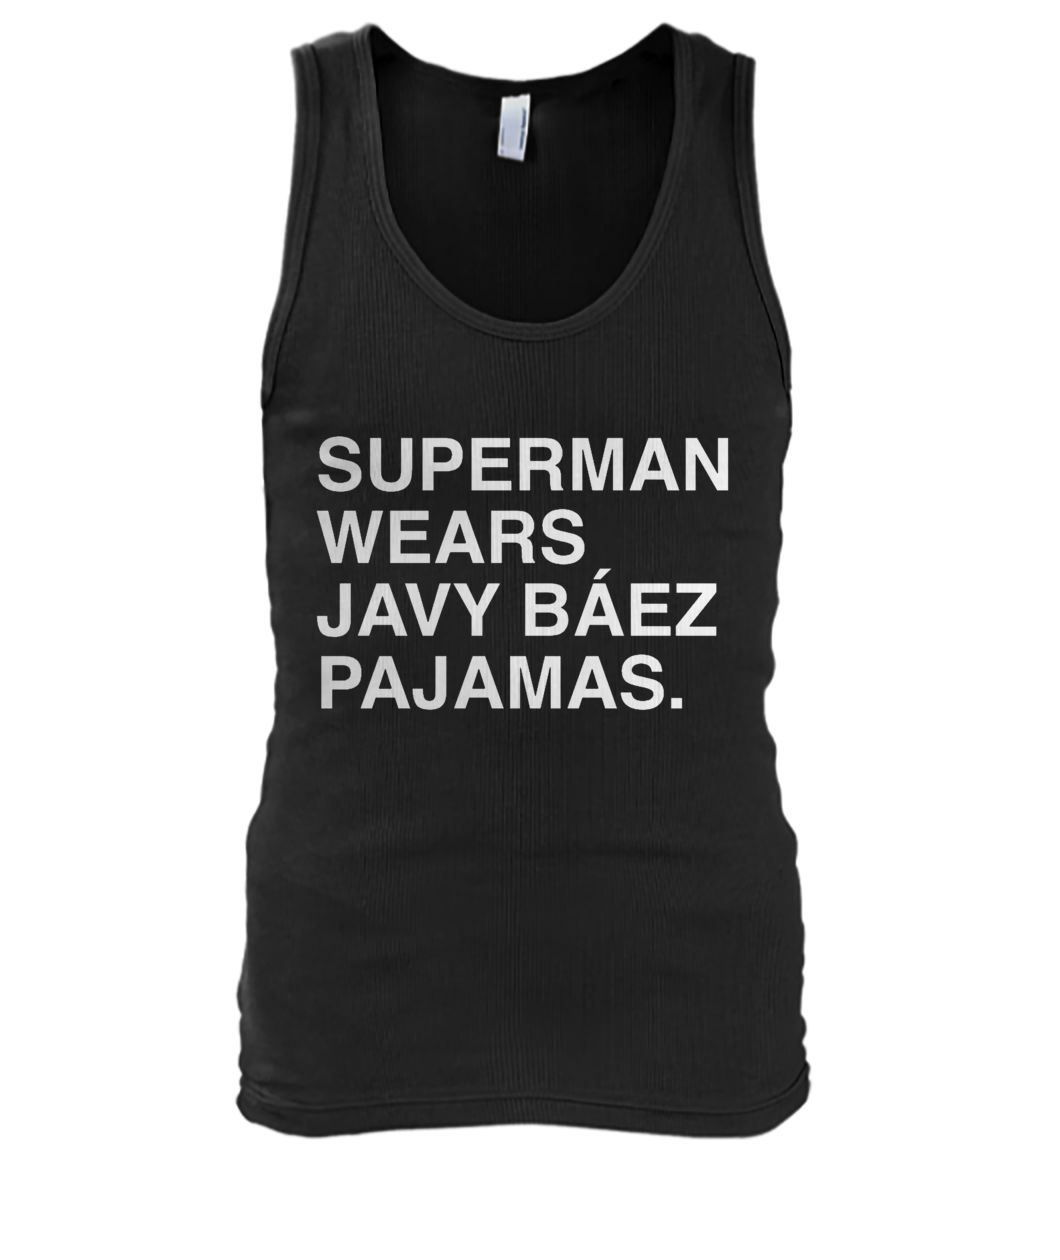 Superman wears javy baez pajamas men's tank top